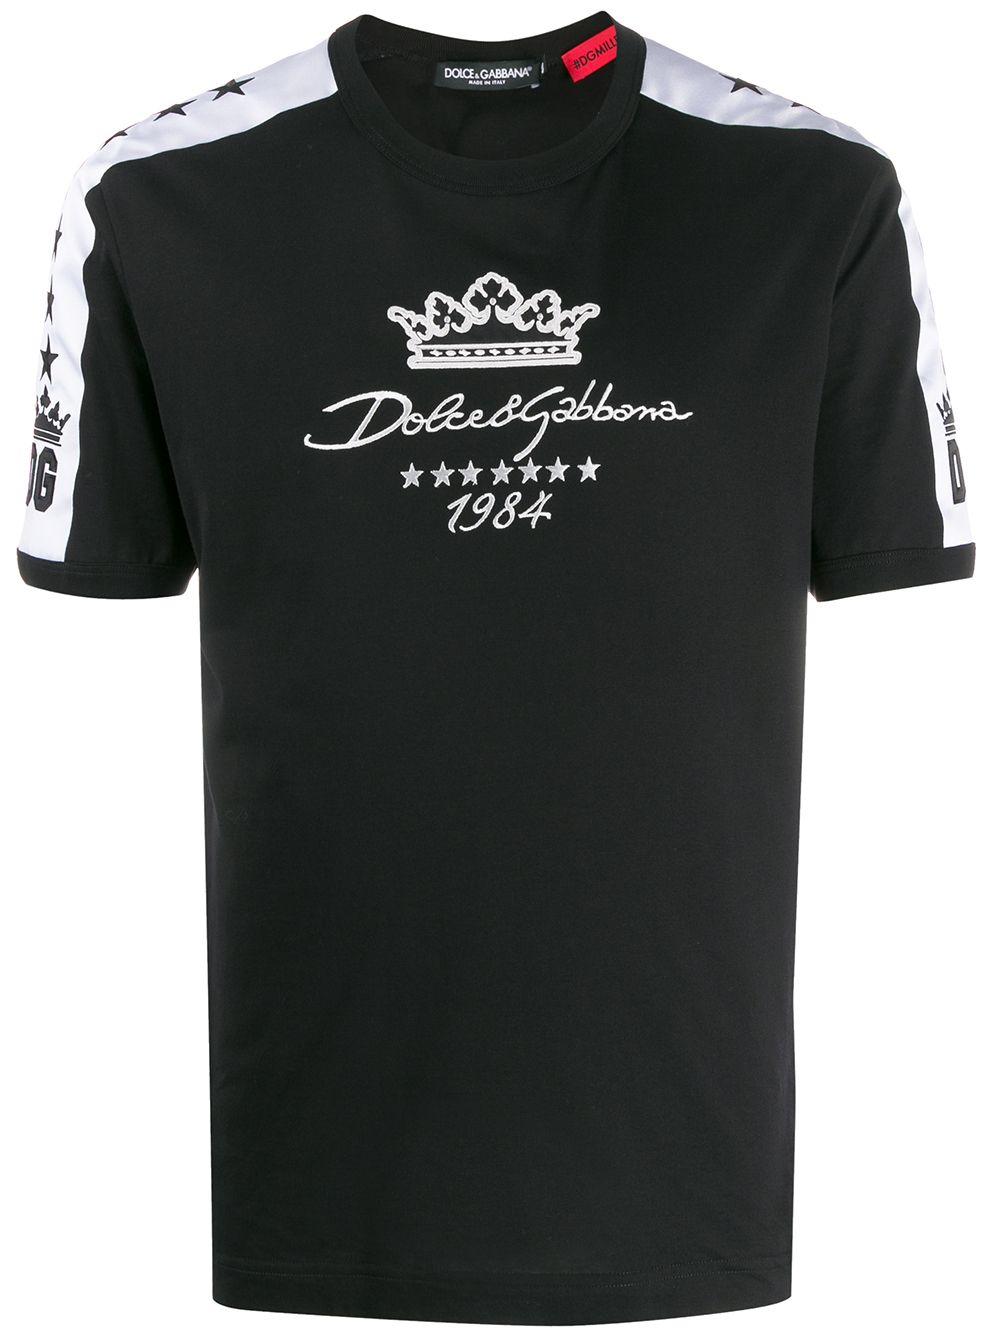 Dolce & Gabbana Cotton Dg Since 1984 Print T-shirt in Black for Men - Lyst